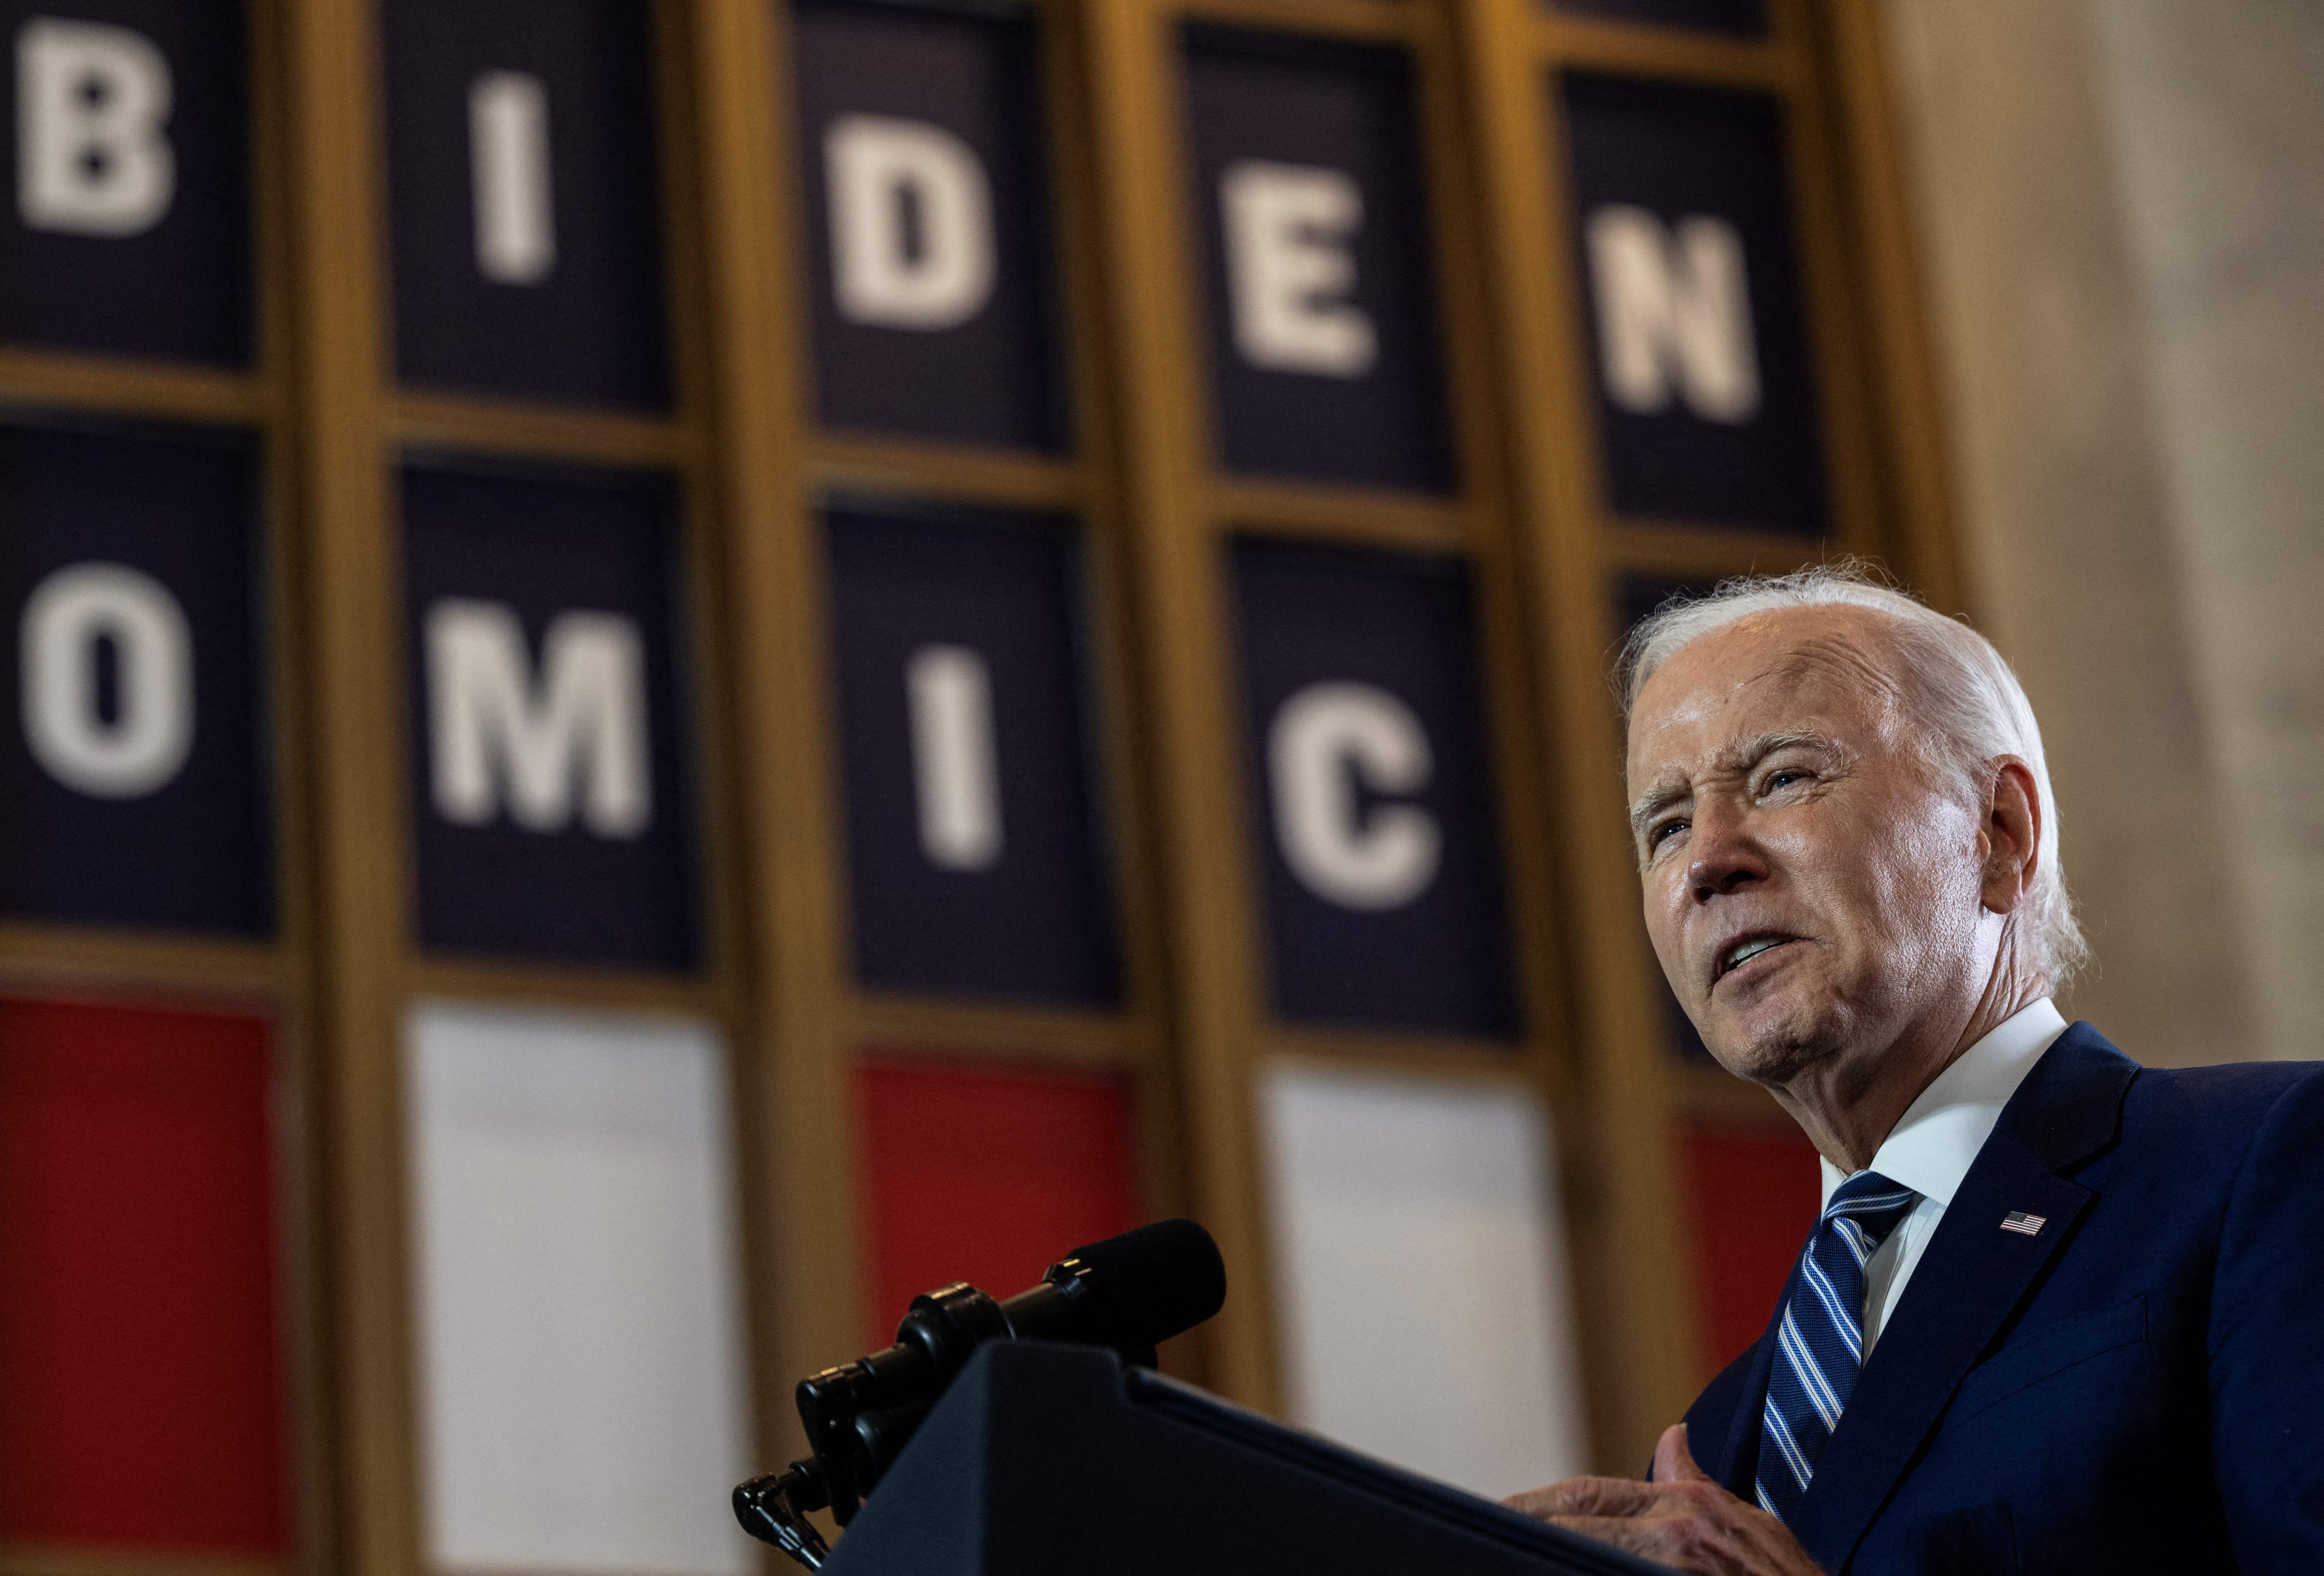 President Joe Biden speaks with a banner reading 